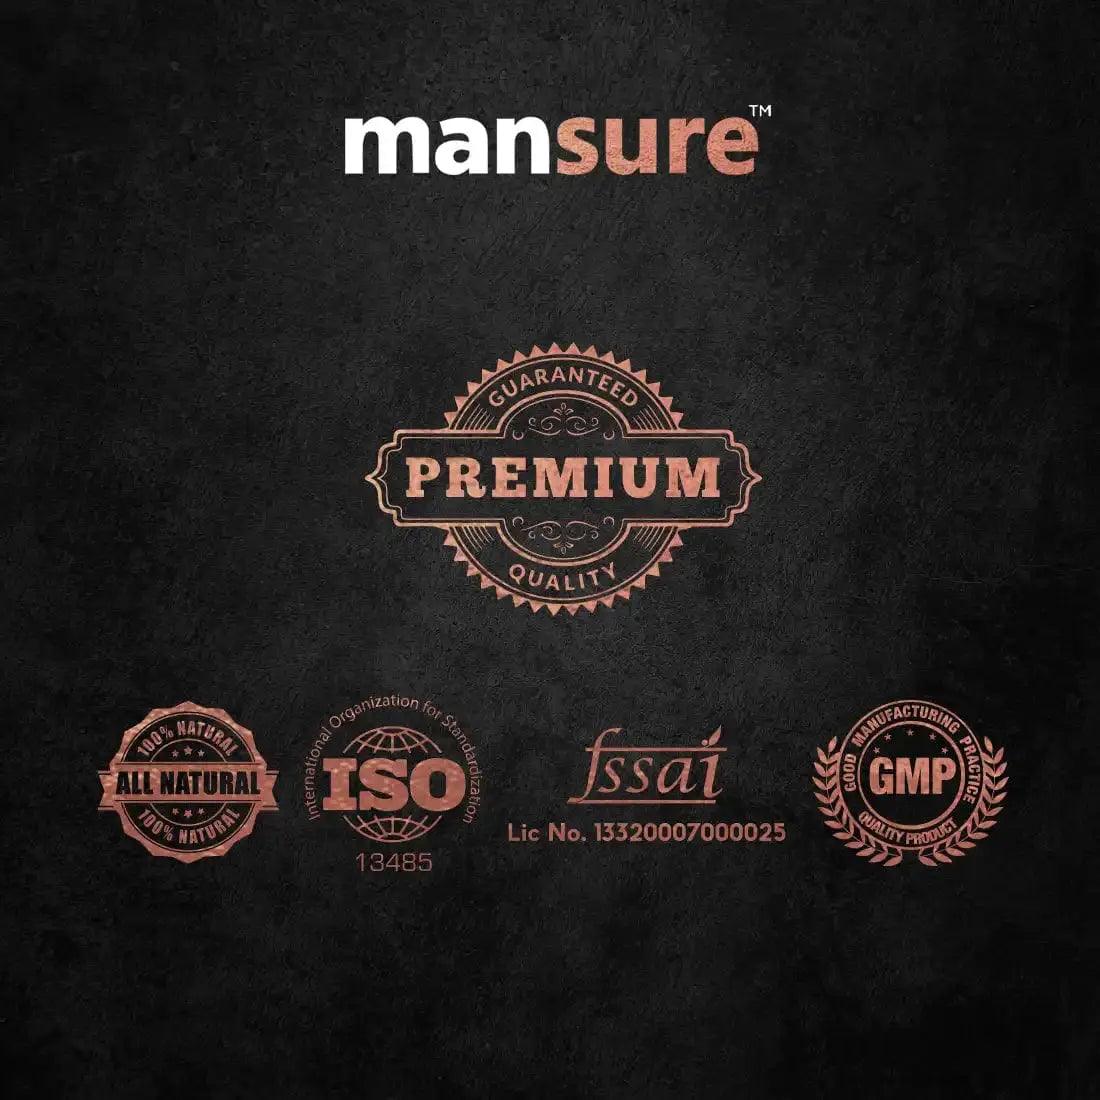 ManSure PROLONG for Men's Health - 60 Capsules